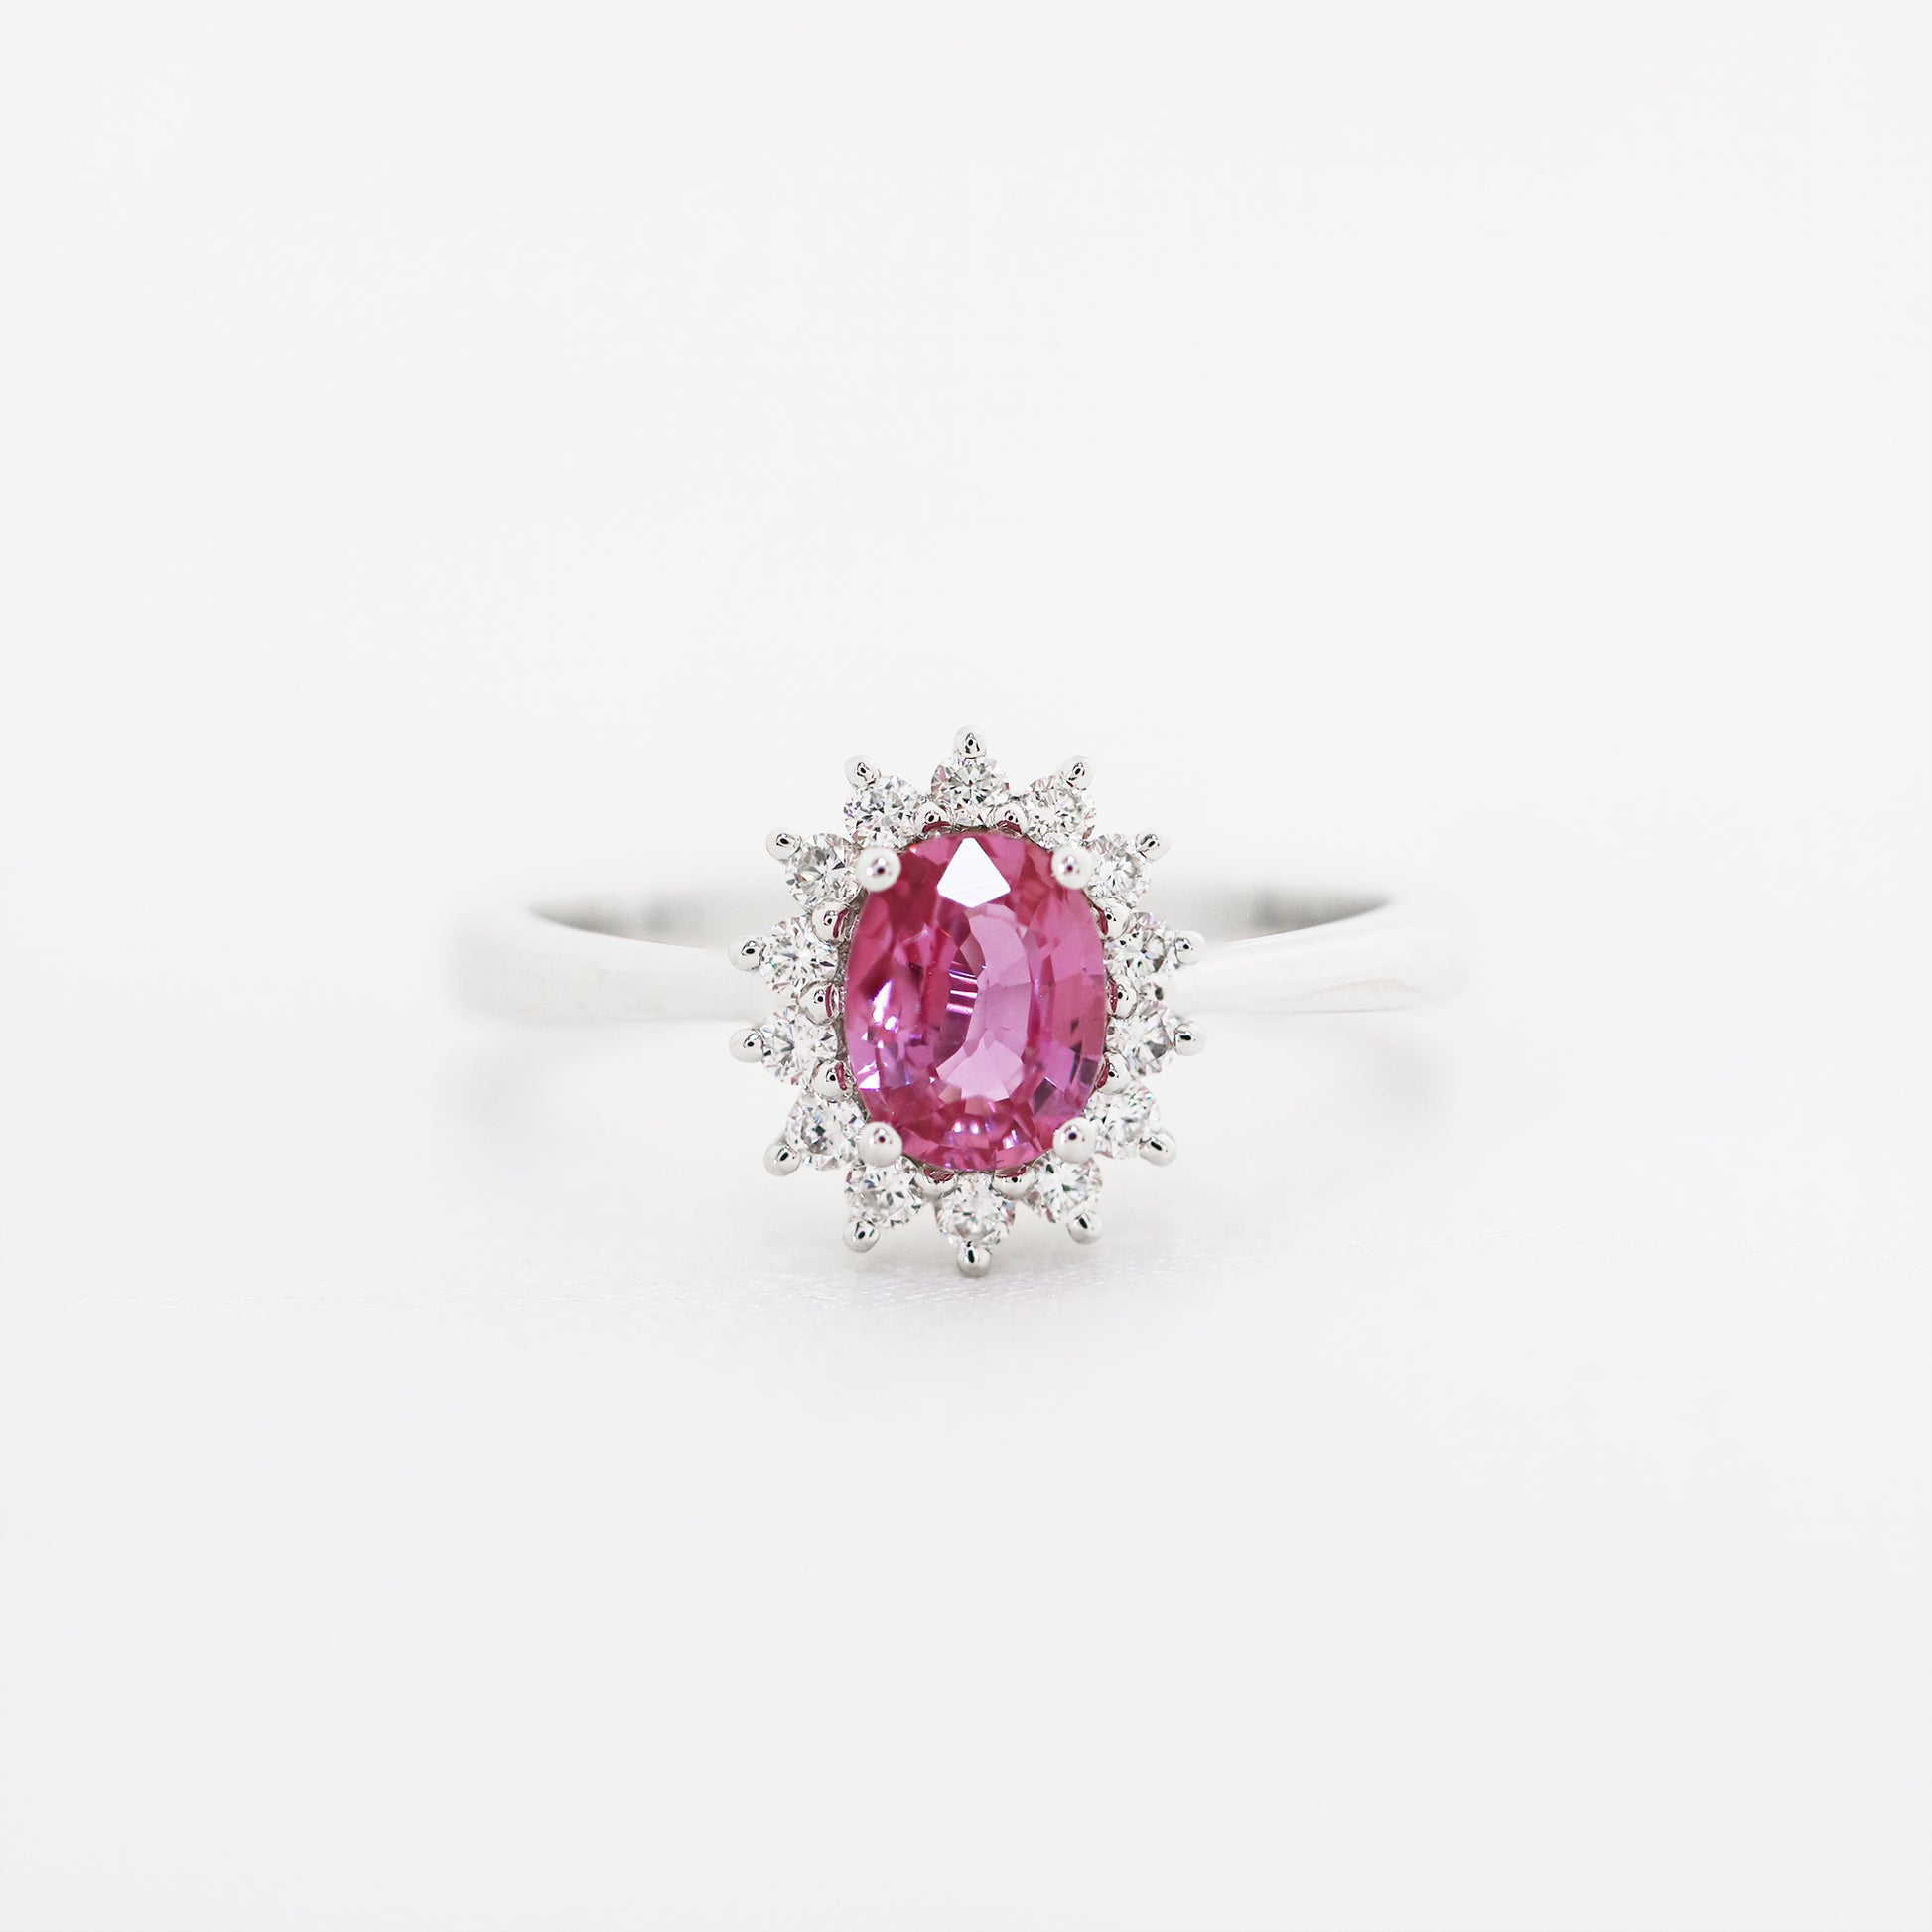  18k白金粉紅藍寶石戒指18k White Gold Pink Sapphire Ring